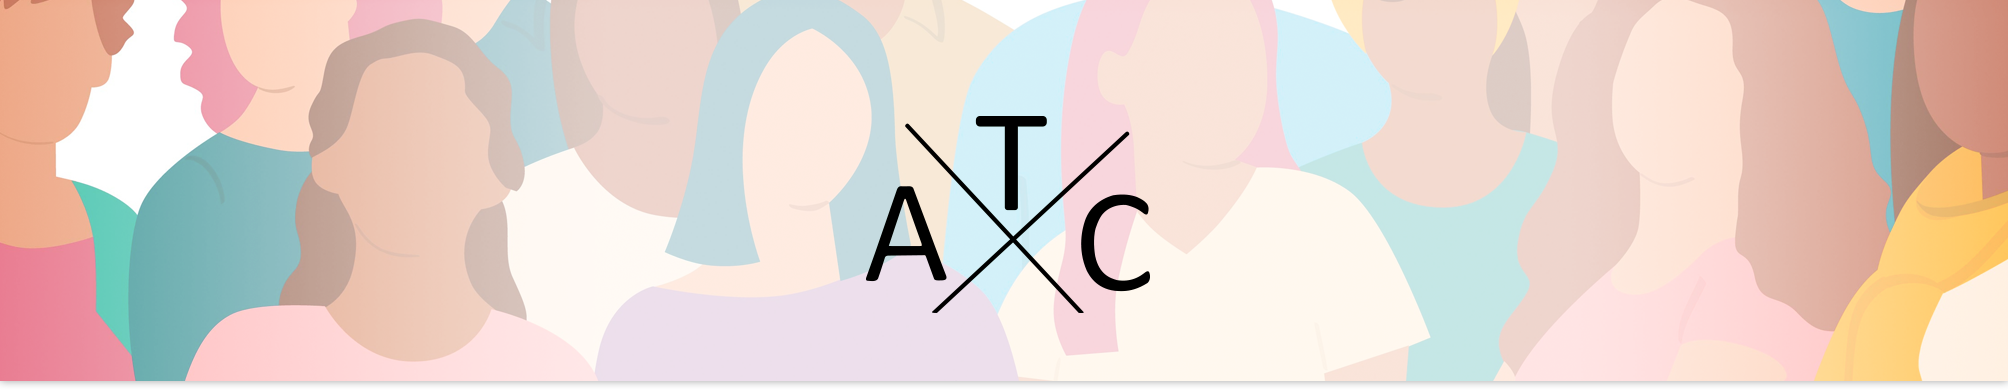 atc-membership-advance-your-skills-and-grow-your-business